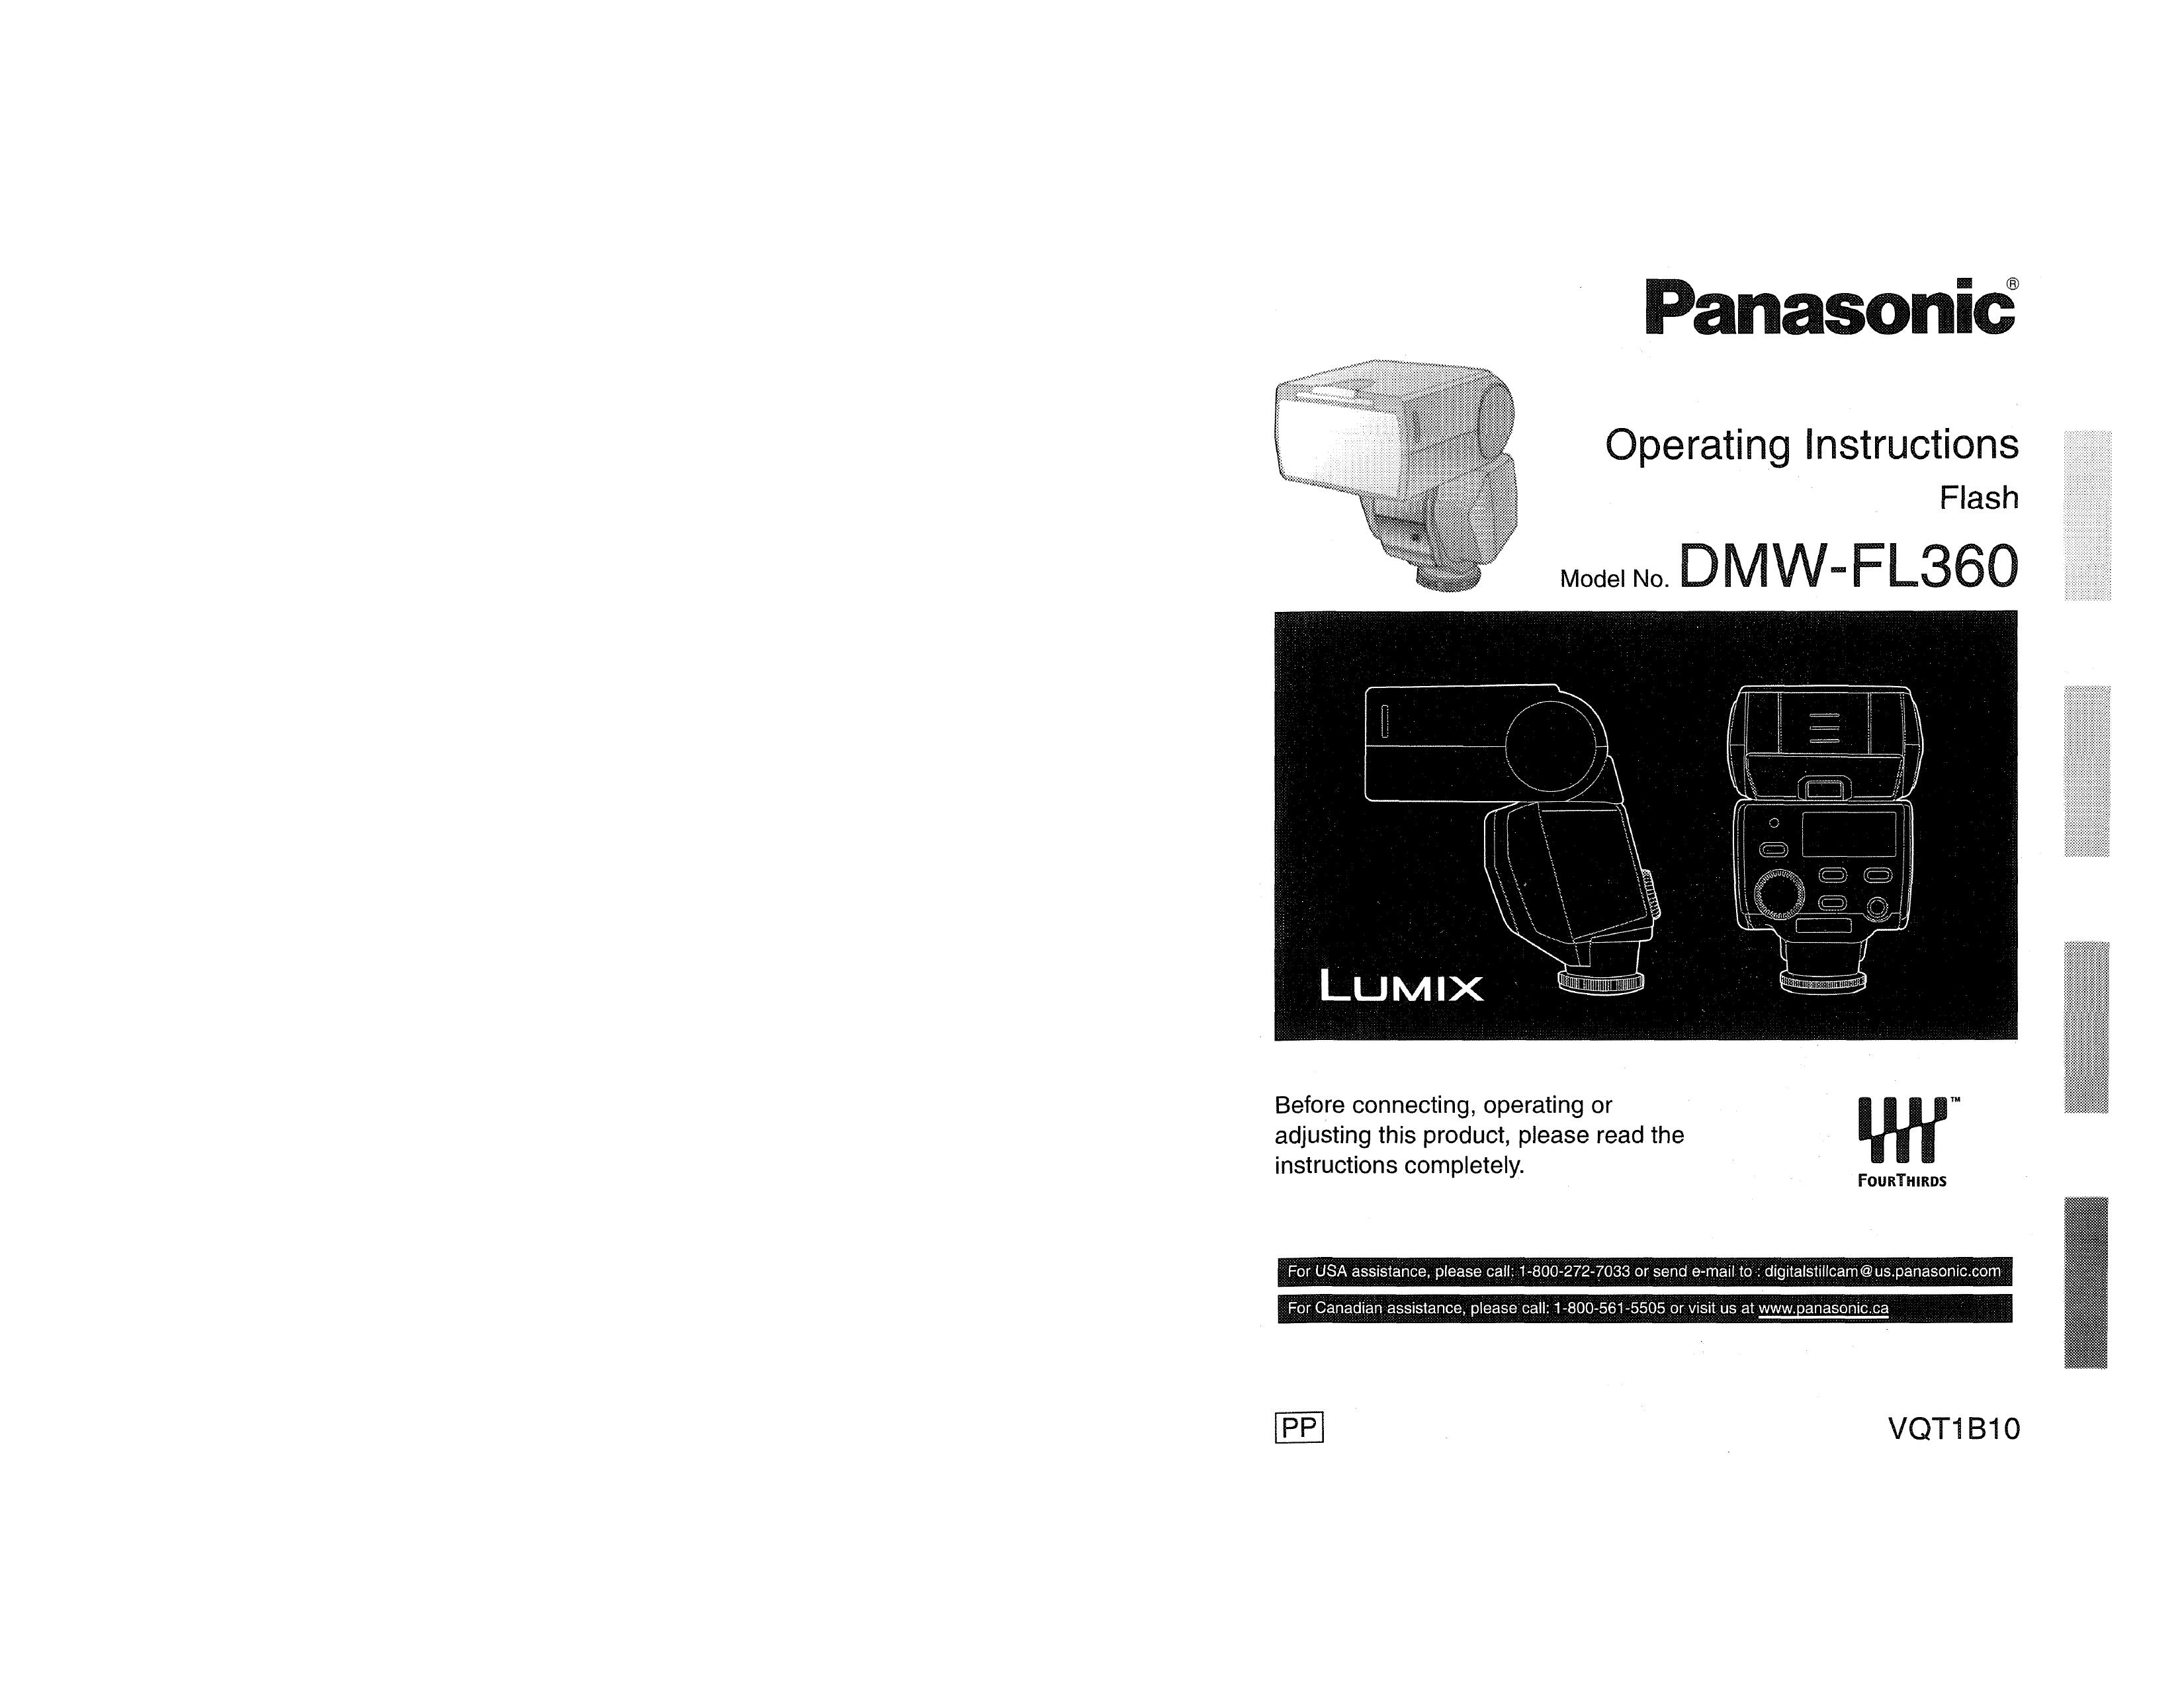 Panasonic DMW-FL360 Camera Flash User Manual